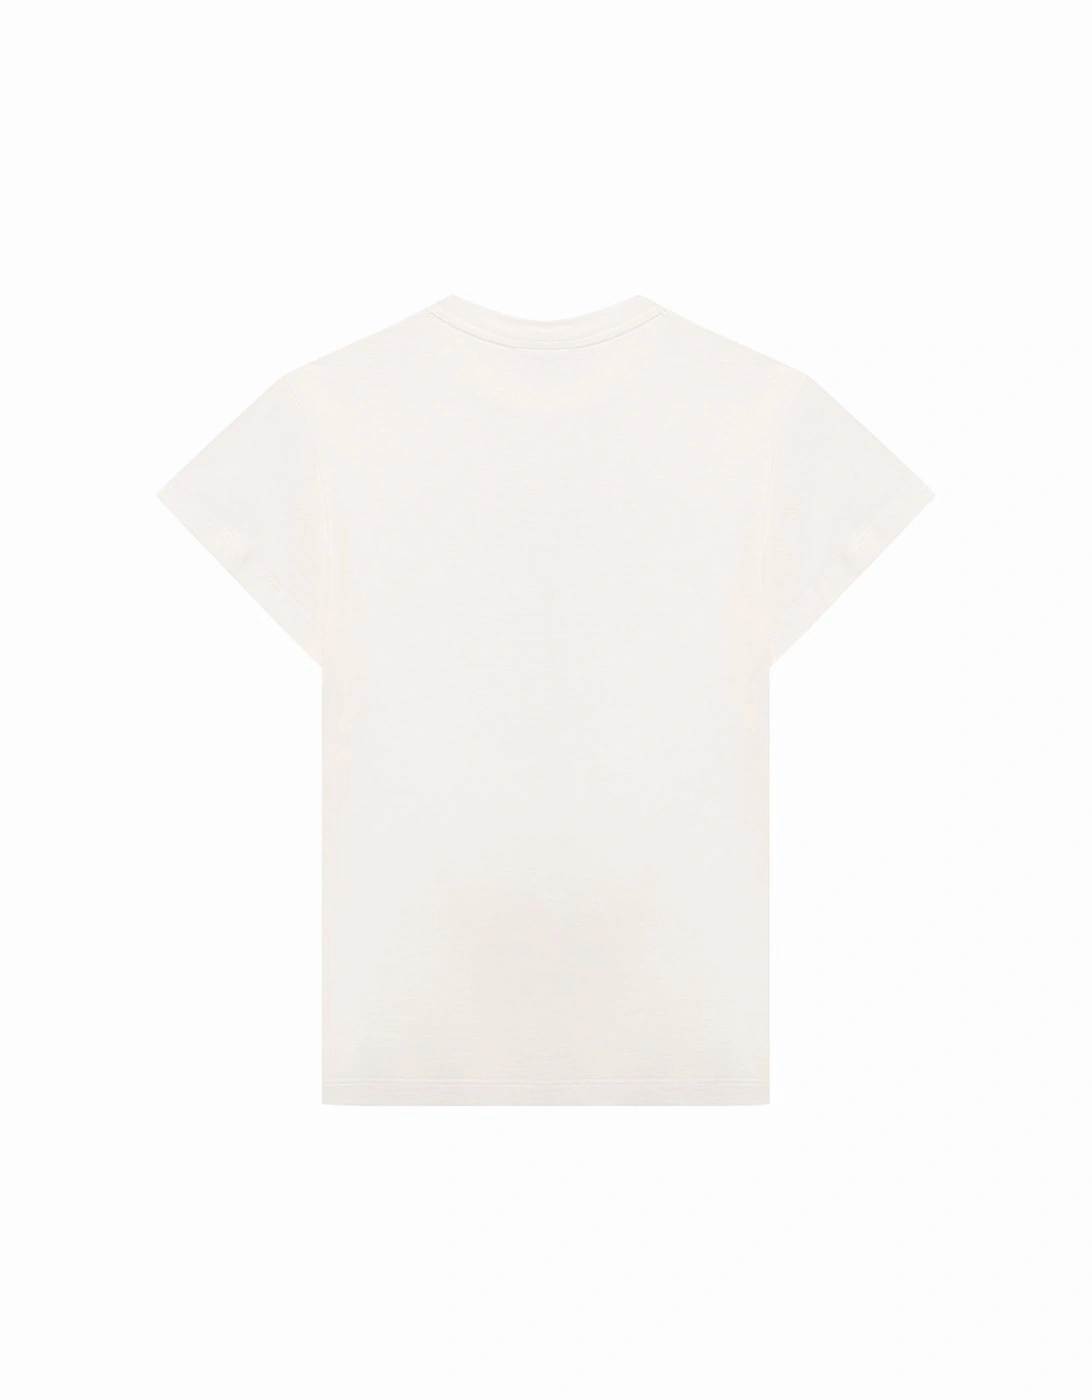 Girls Graphic Print T-shirt Dress White